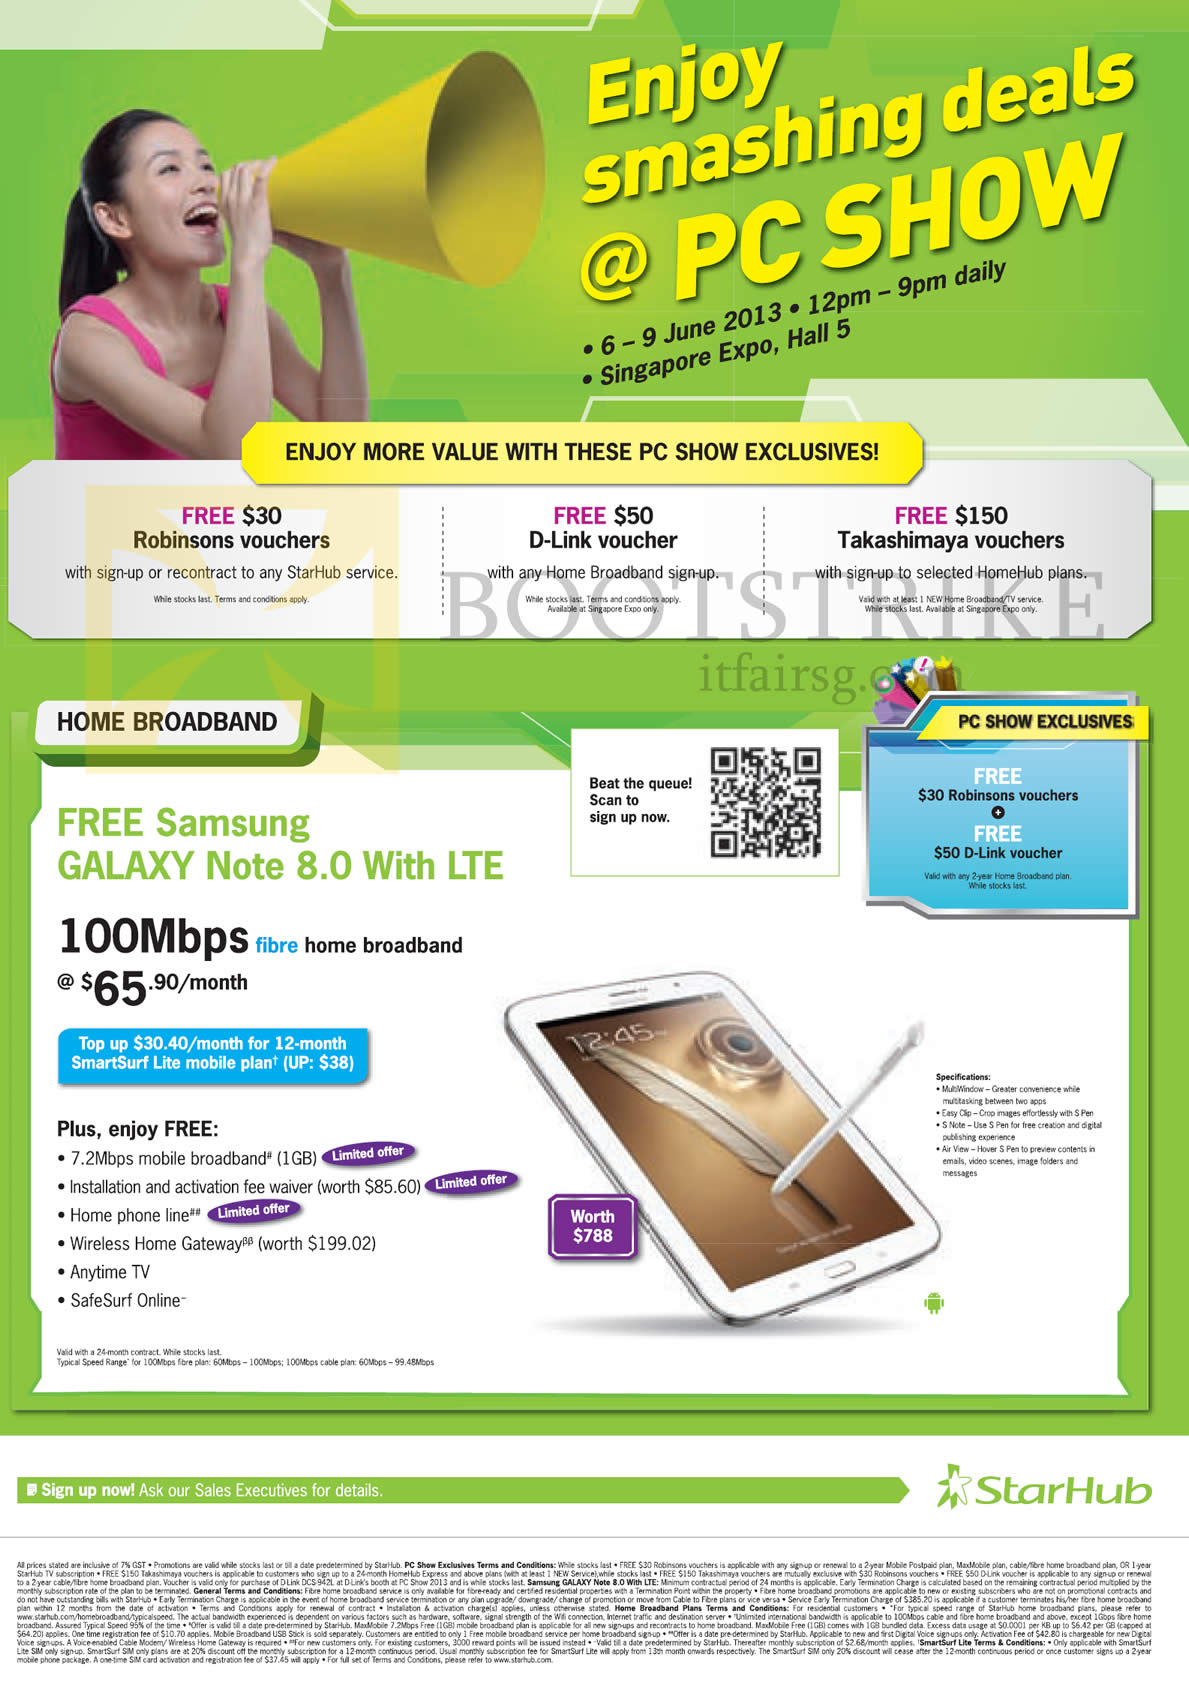 PC SHOW 2013 price list image brochure of Starhub Exclusives Free Robinsons Vouchers, D-Link Voucher, Takashimaya, 100Mbps Fibre Broadband 65.90 Samsung Galaxy Note 8.0